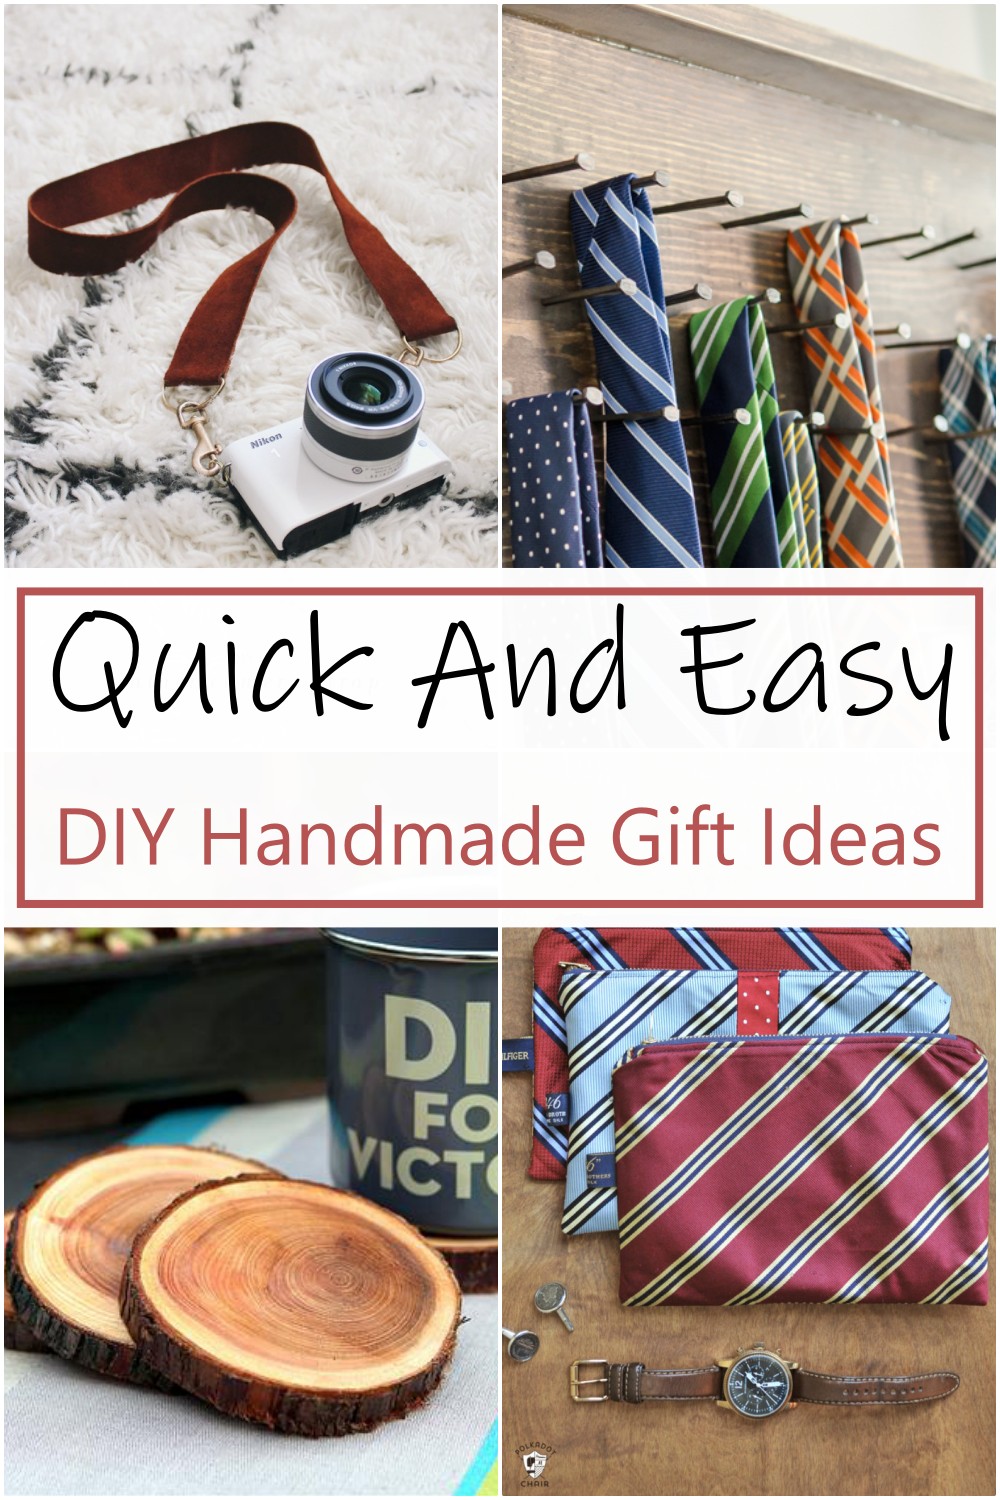 DIY Handmade Gift Ideas